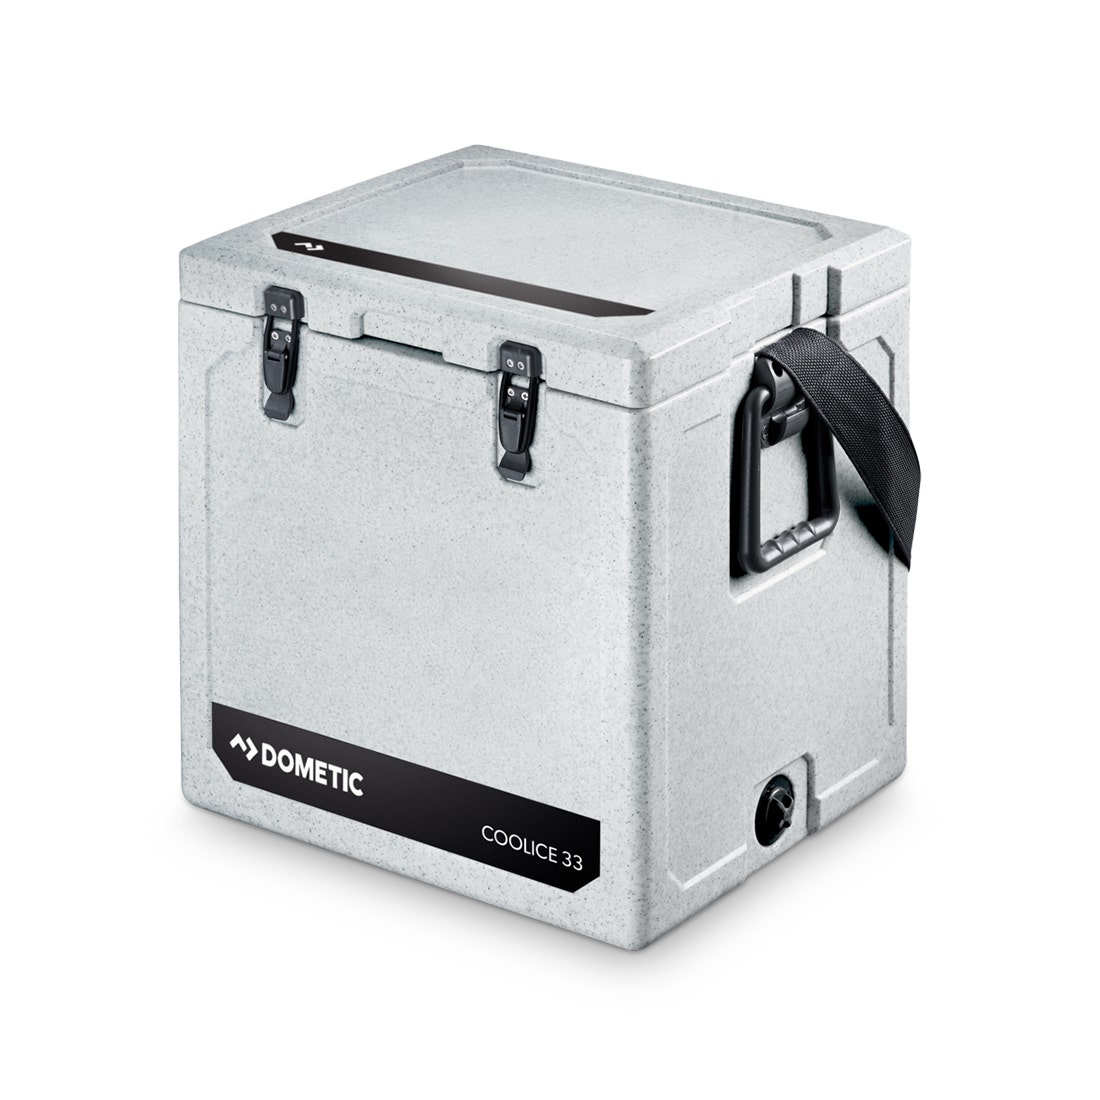 DOMETIC ถังเก็บความเย็น Cool Ice Box รุ่น WCI33 ความจุ 33 ลิตร-01